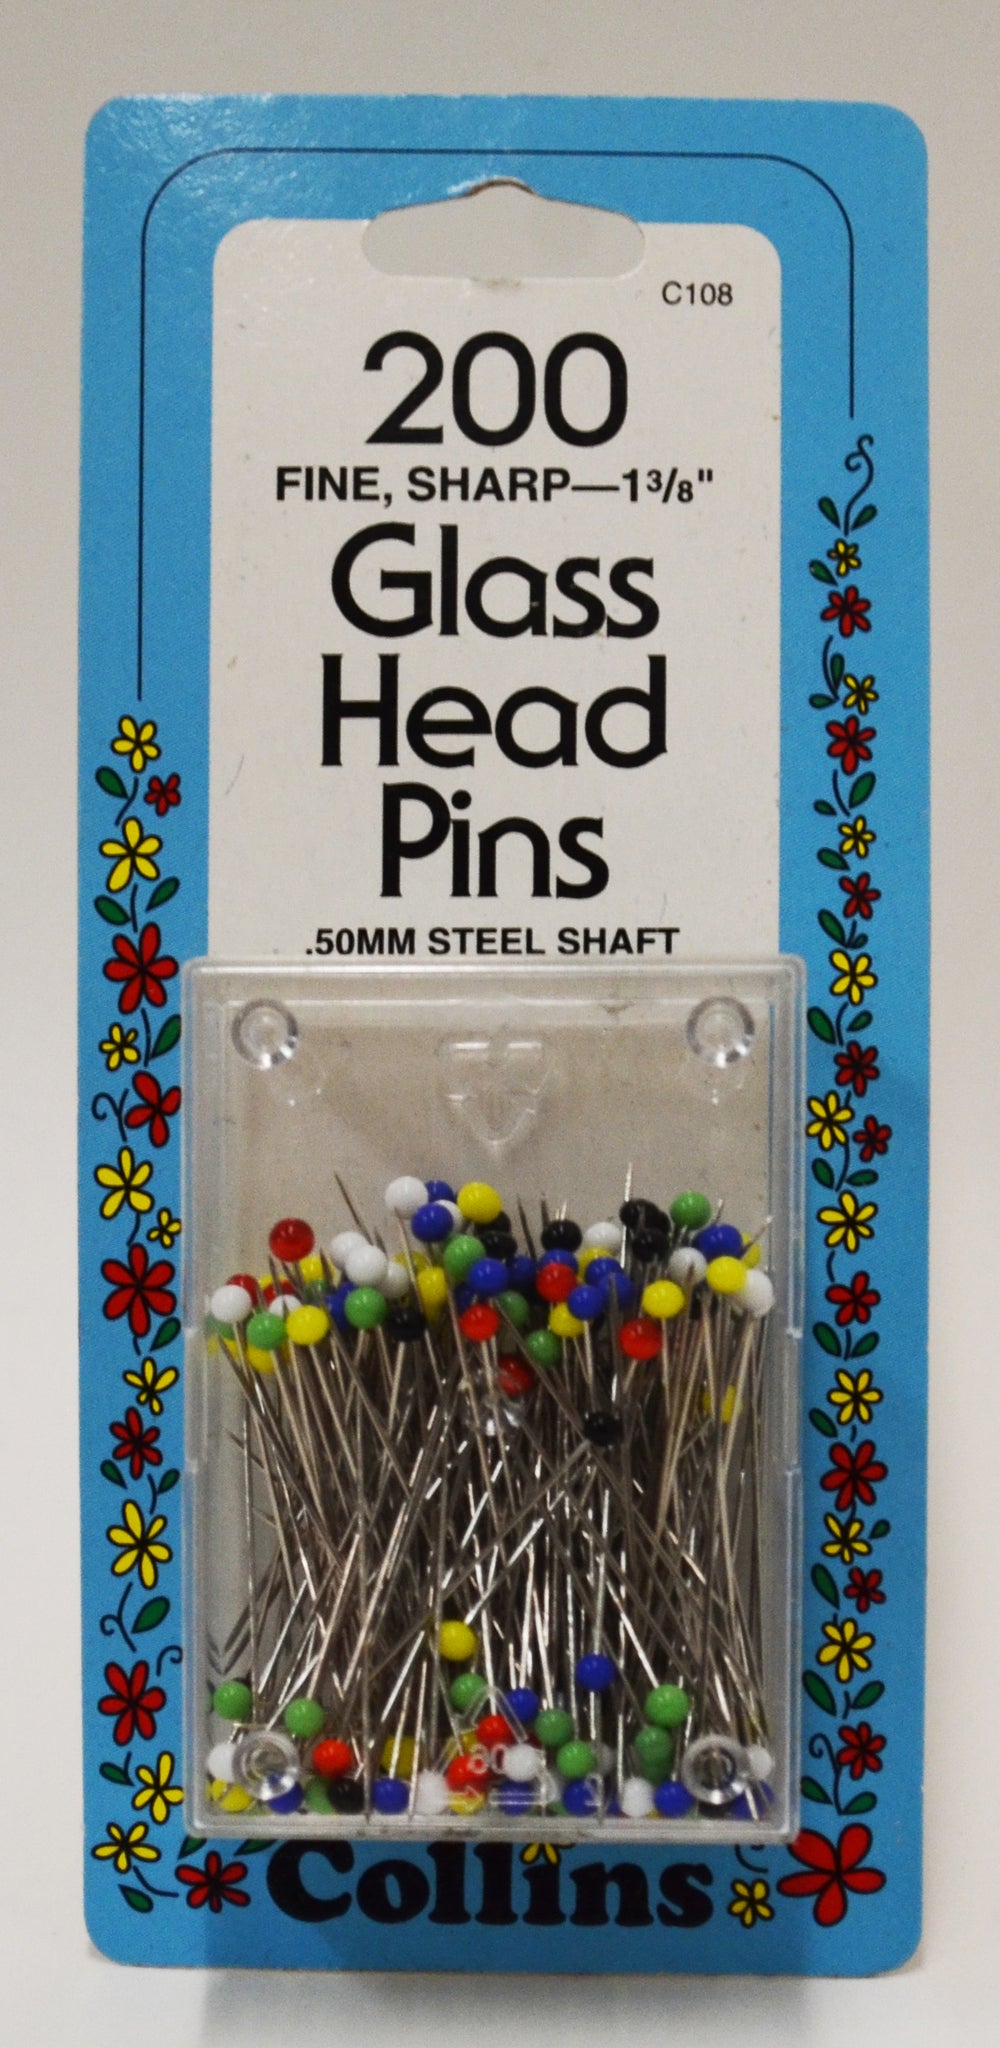 Glass Head Pins - 200 Fine, Sharp 1 3-8